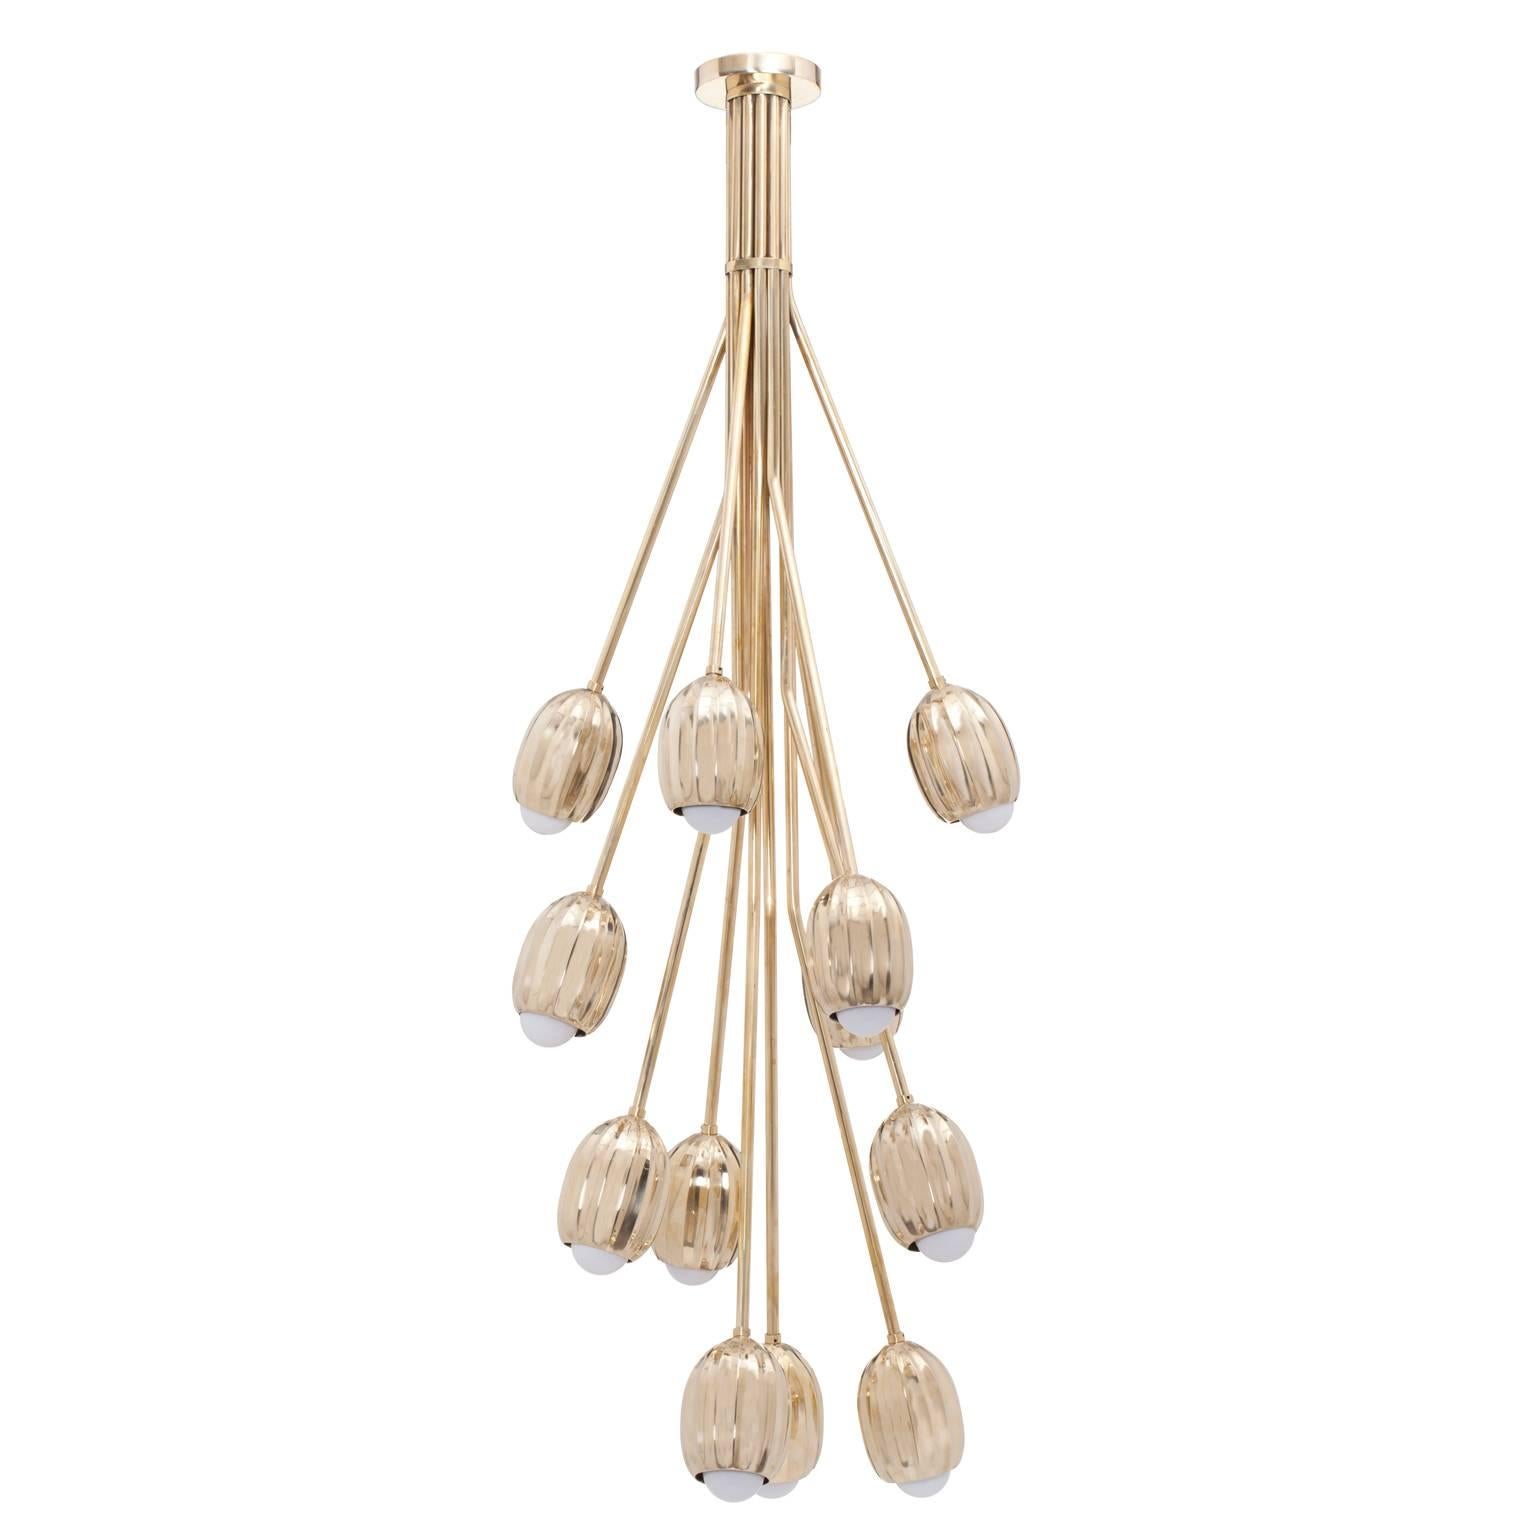 cast brass chandelier